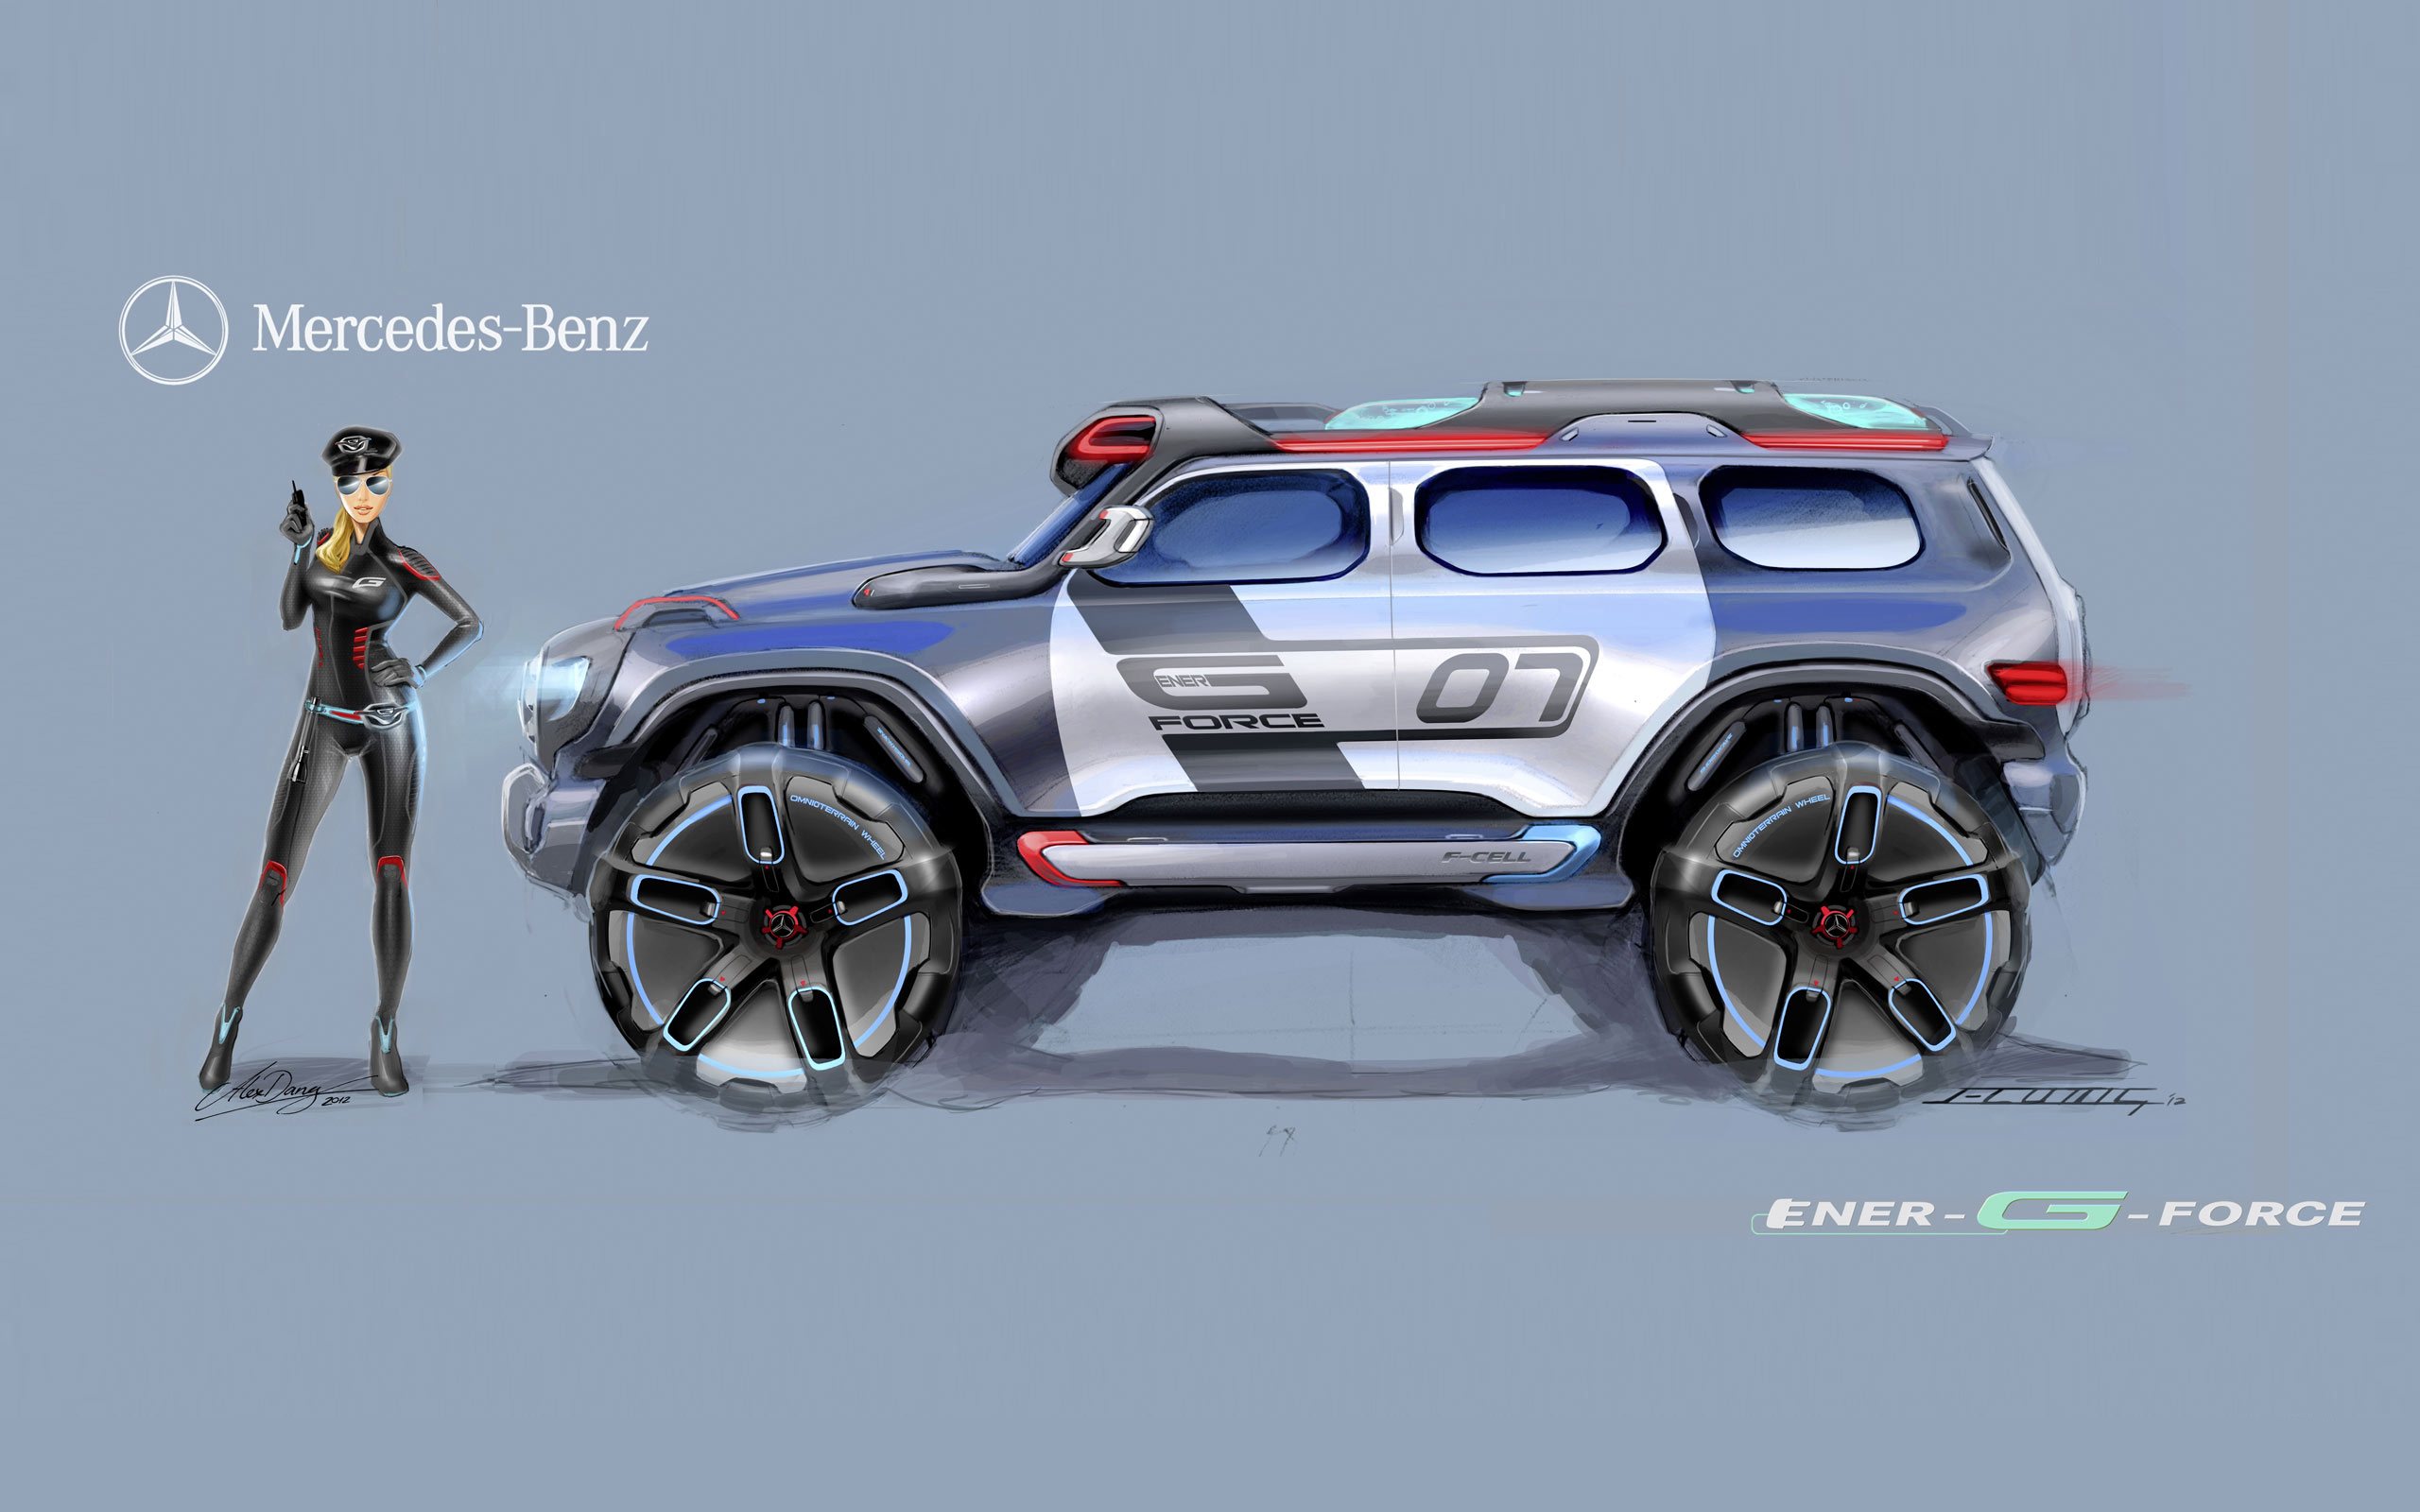 Гелендваген 2025. Mercedes-Benz Ener-g-Force Concept - 2012. Мерседес Ener-g-Force концепт. Mercedes Benz Ener g Force Concept. Мерседес Ener-g-Force будущего.